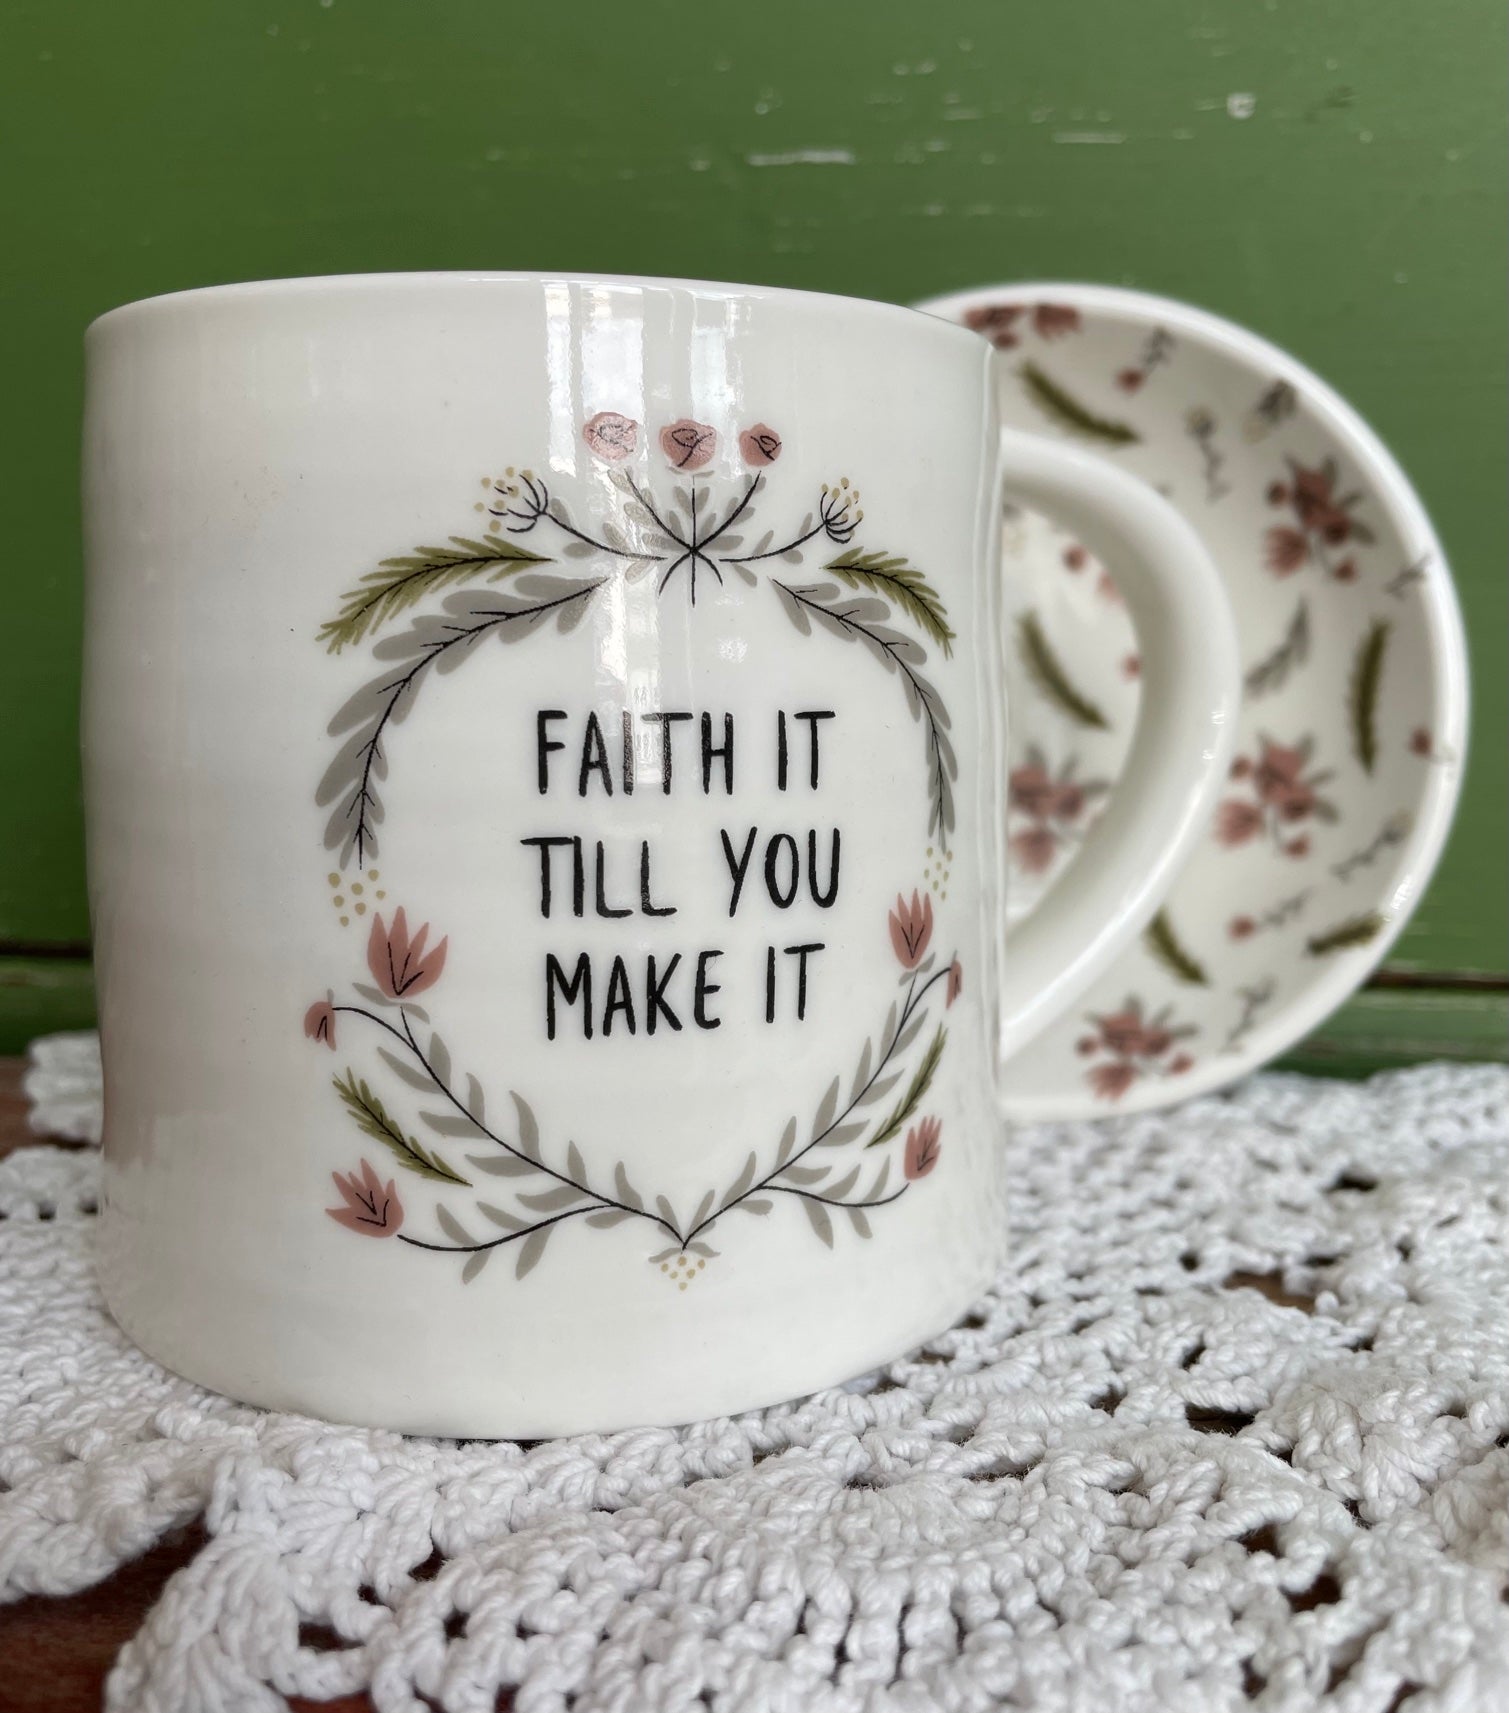 "faith it til you make it" cream floral mug and saucer set